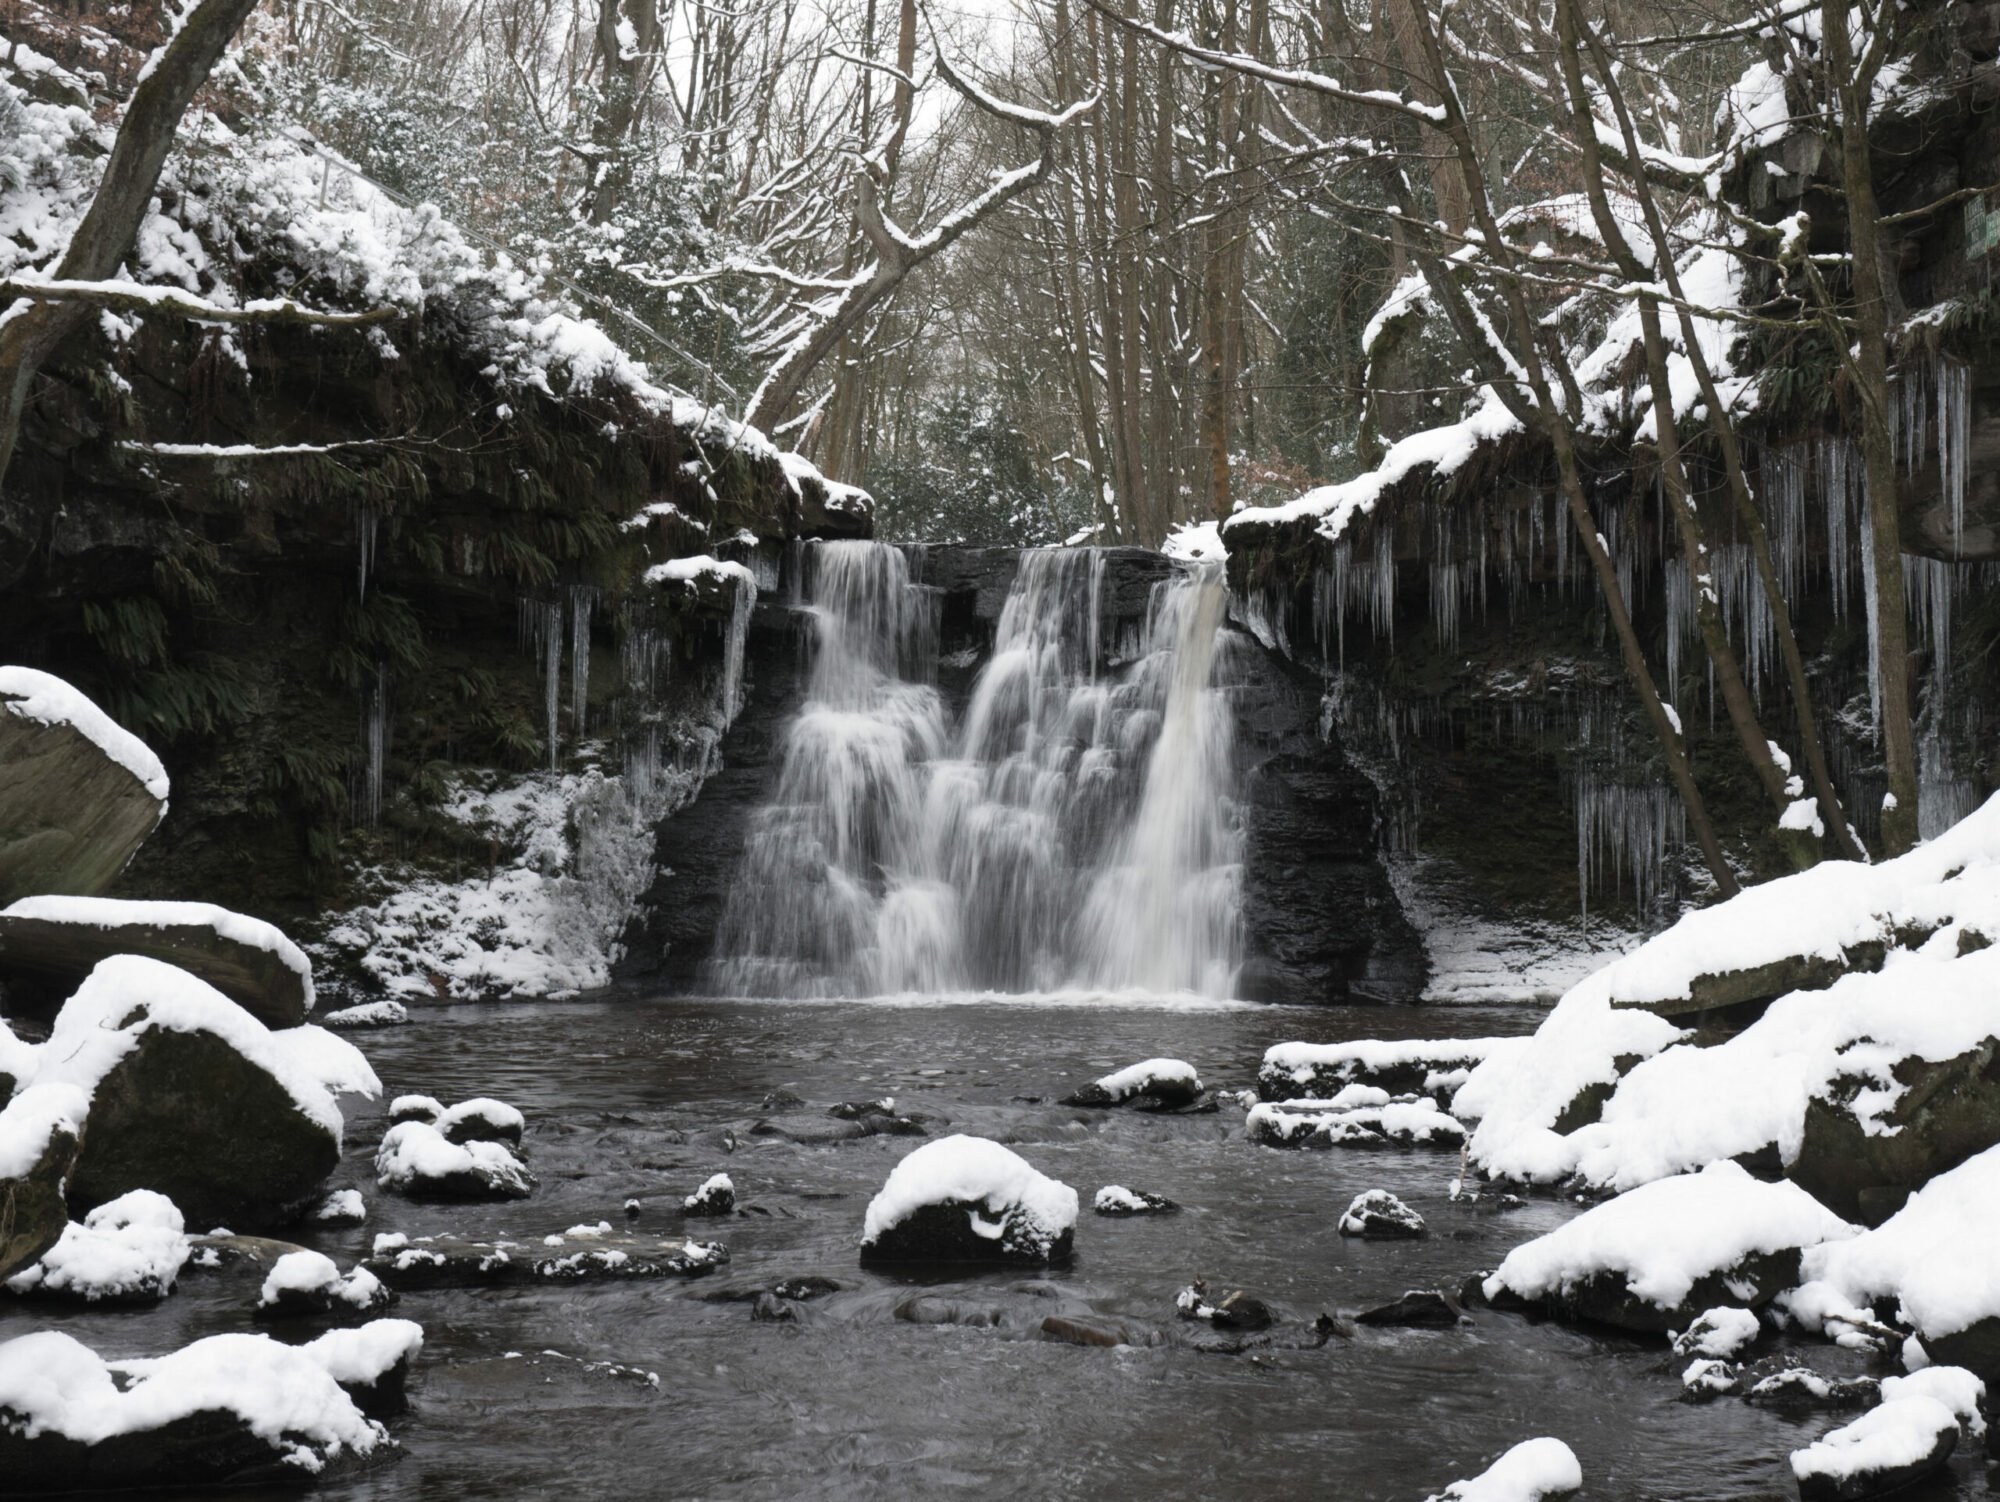 Goitstock Waterfall in the snow